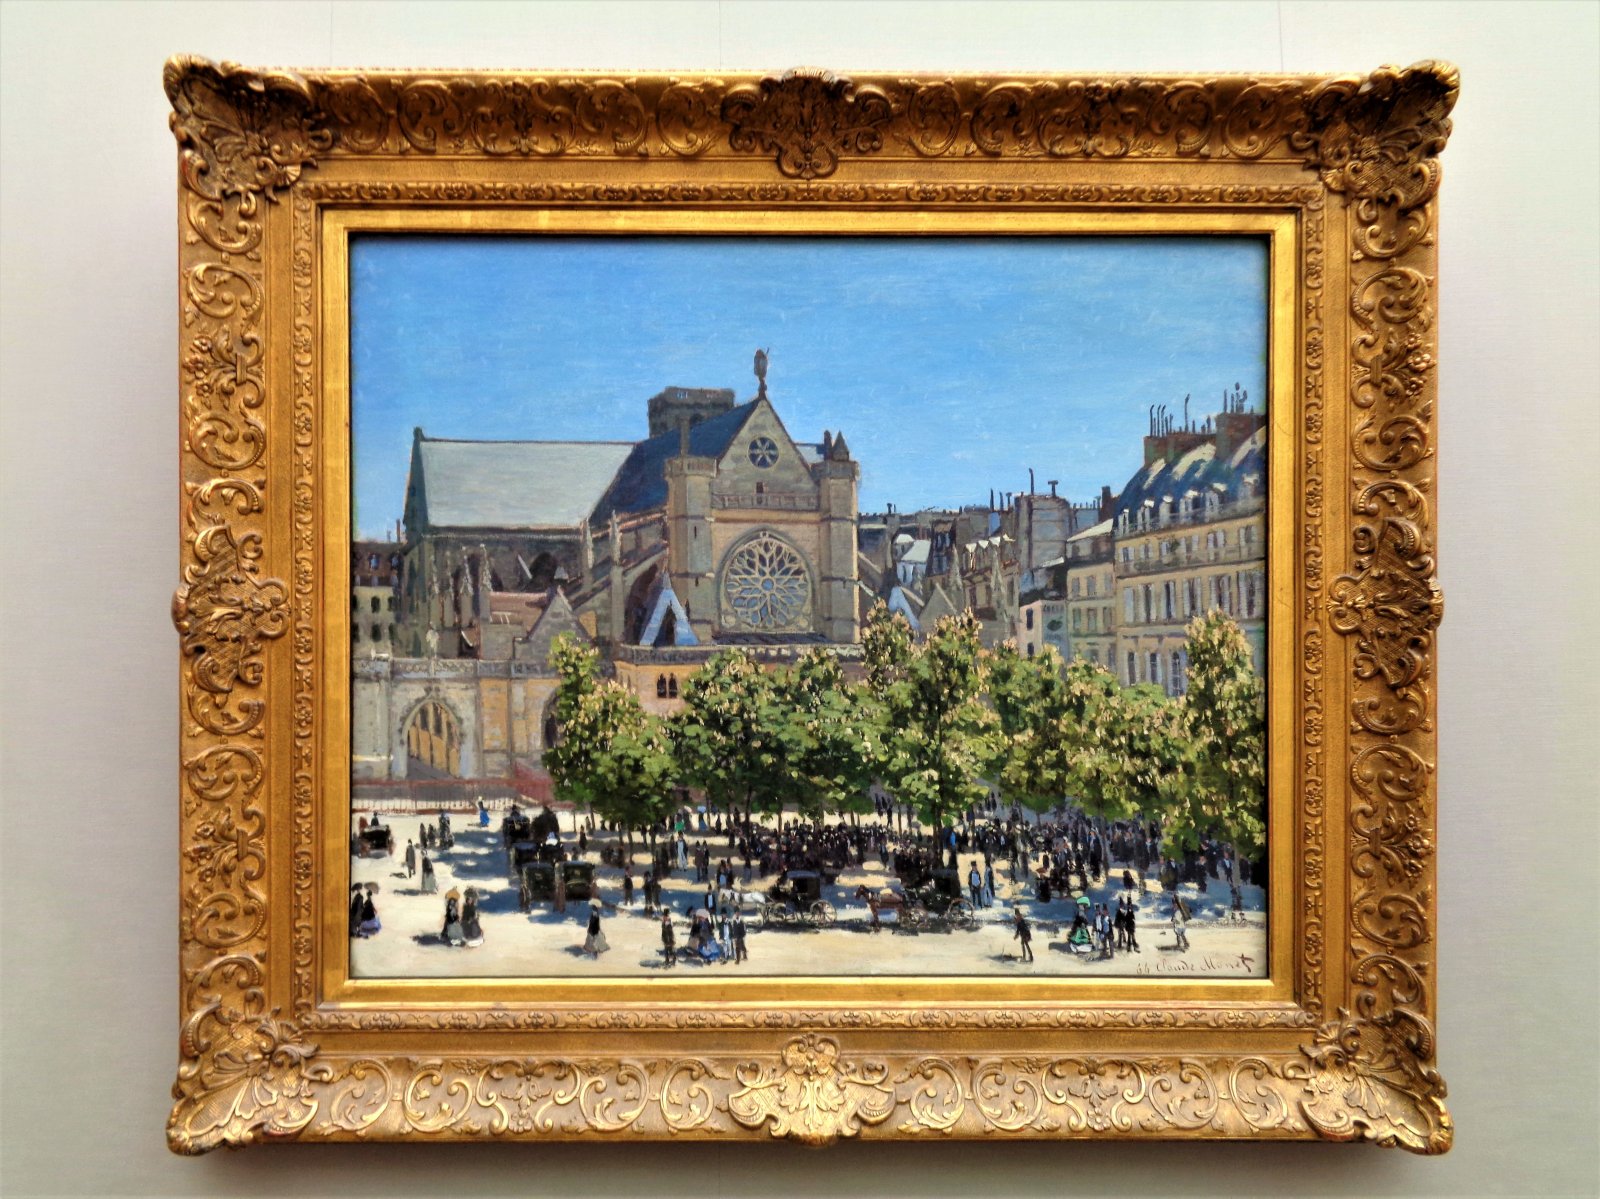 Berlin - Alte Nationalgalerie 20 (Claude Monet - St. Germain l'Auxerrois).JPG